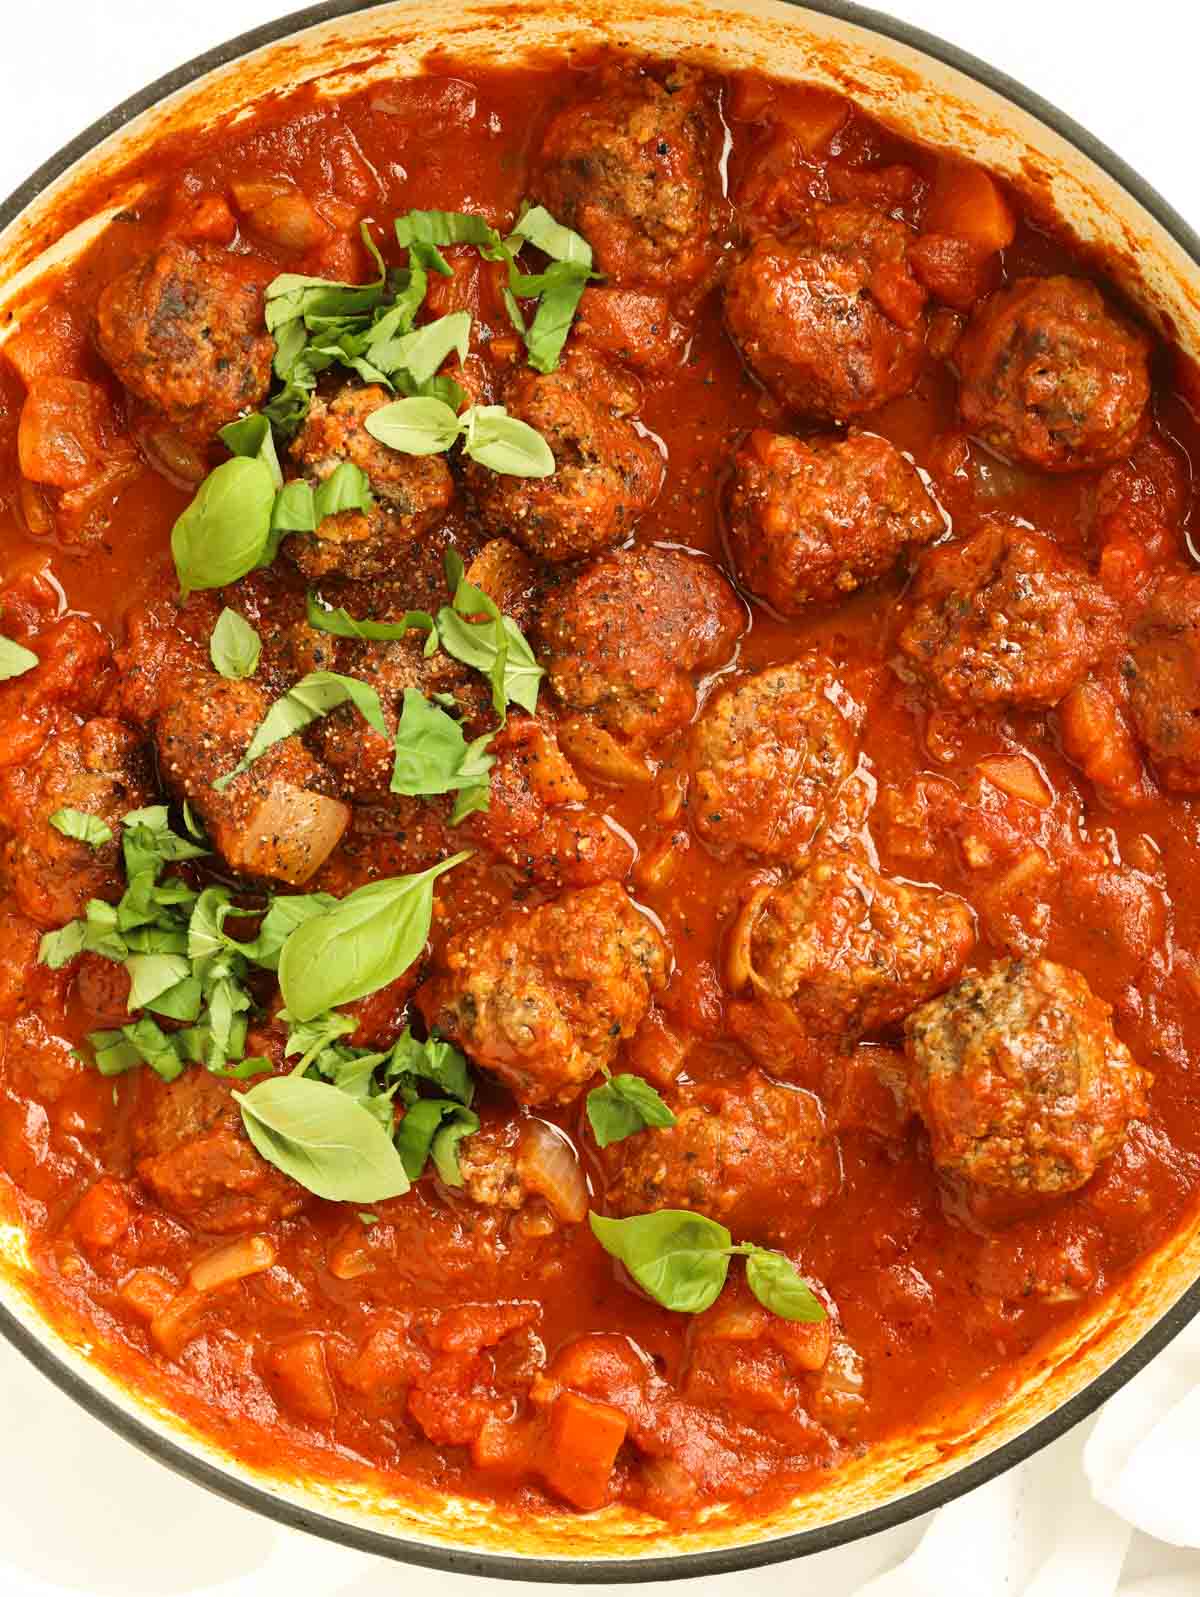 Easy Meatball Recipe to serve with spaghetti